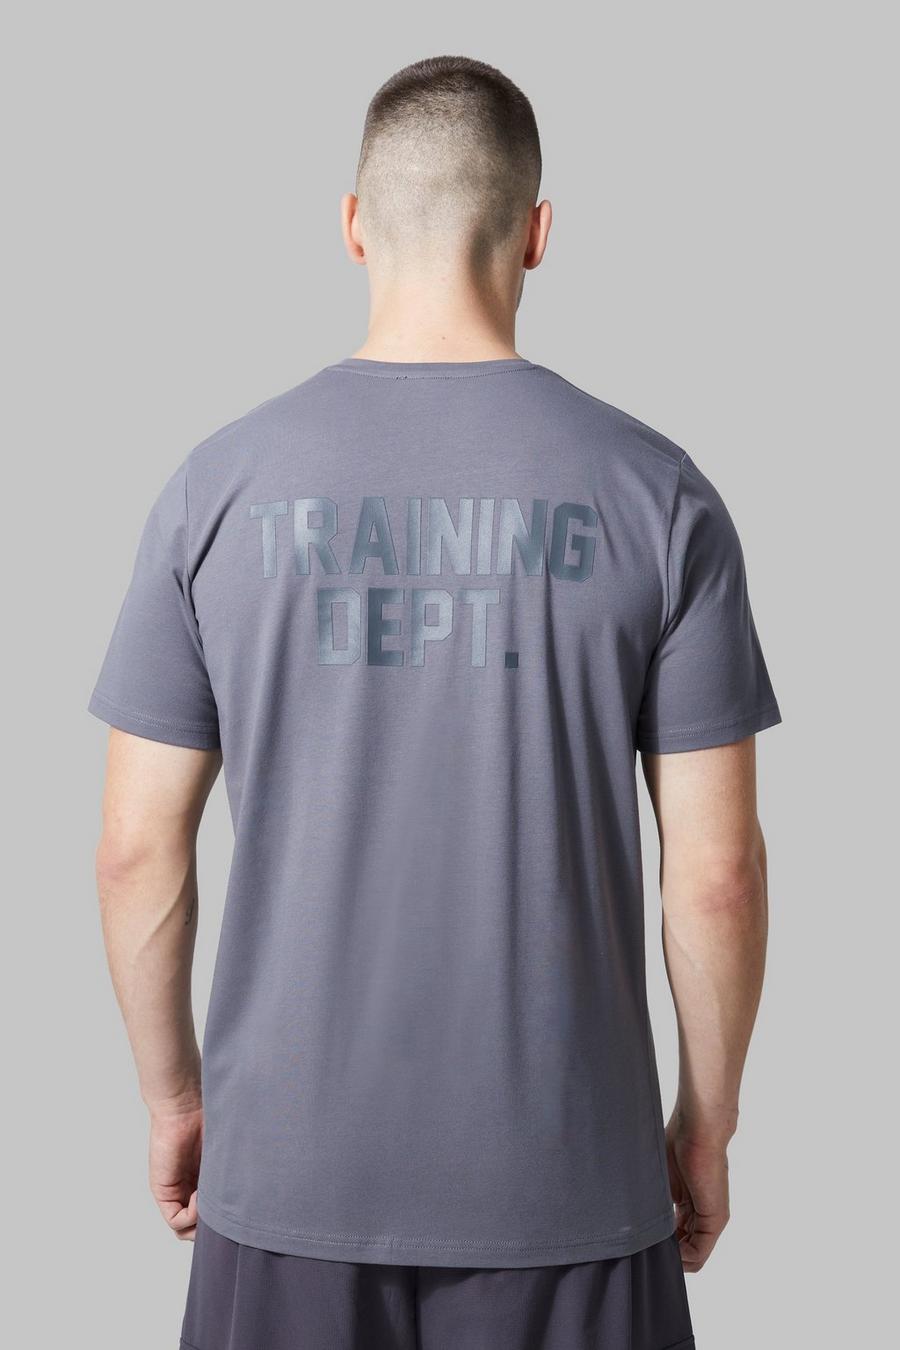 Charcoal grey Tall Active Training Dept Performance Slim T-shirt